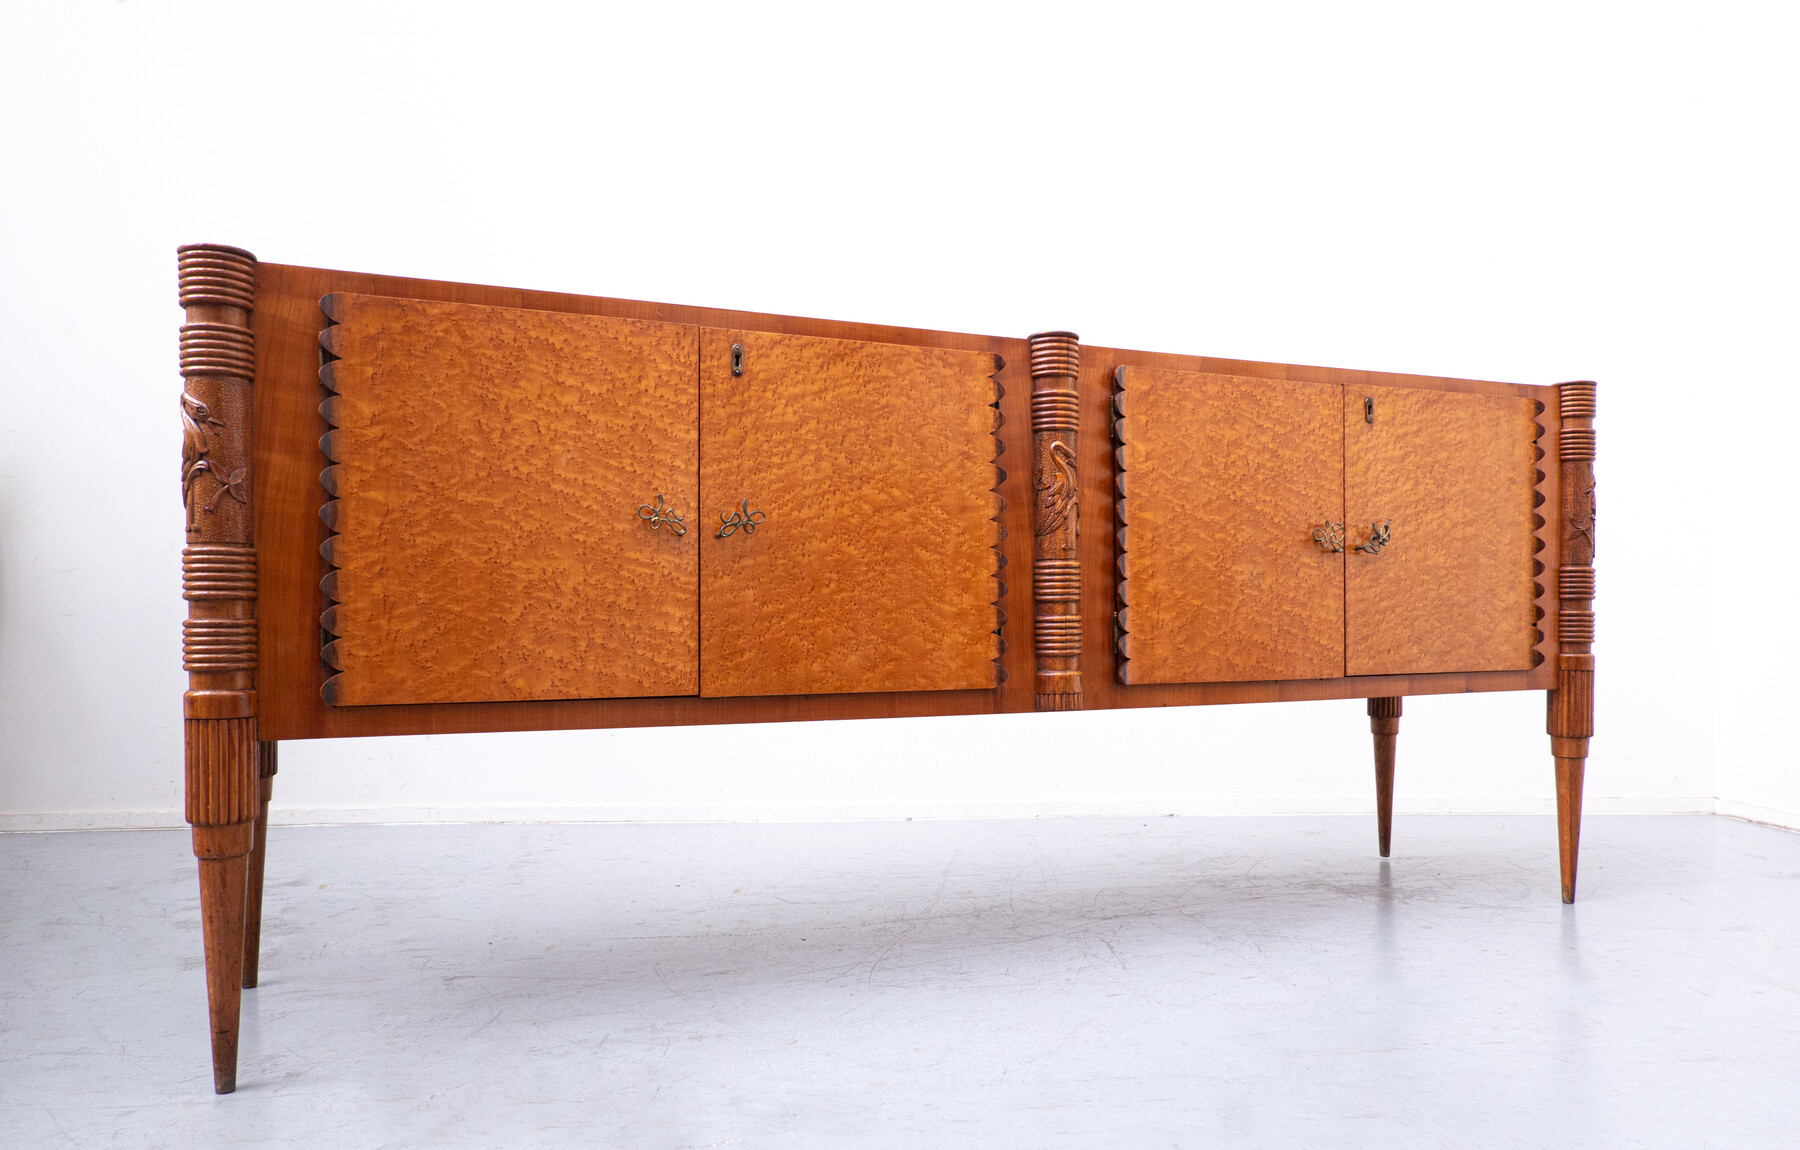 large-italian-wooden-sideboard-by-pier-luigi-colli-with-four-doors-1940s-6394646-en-max.jp